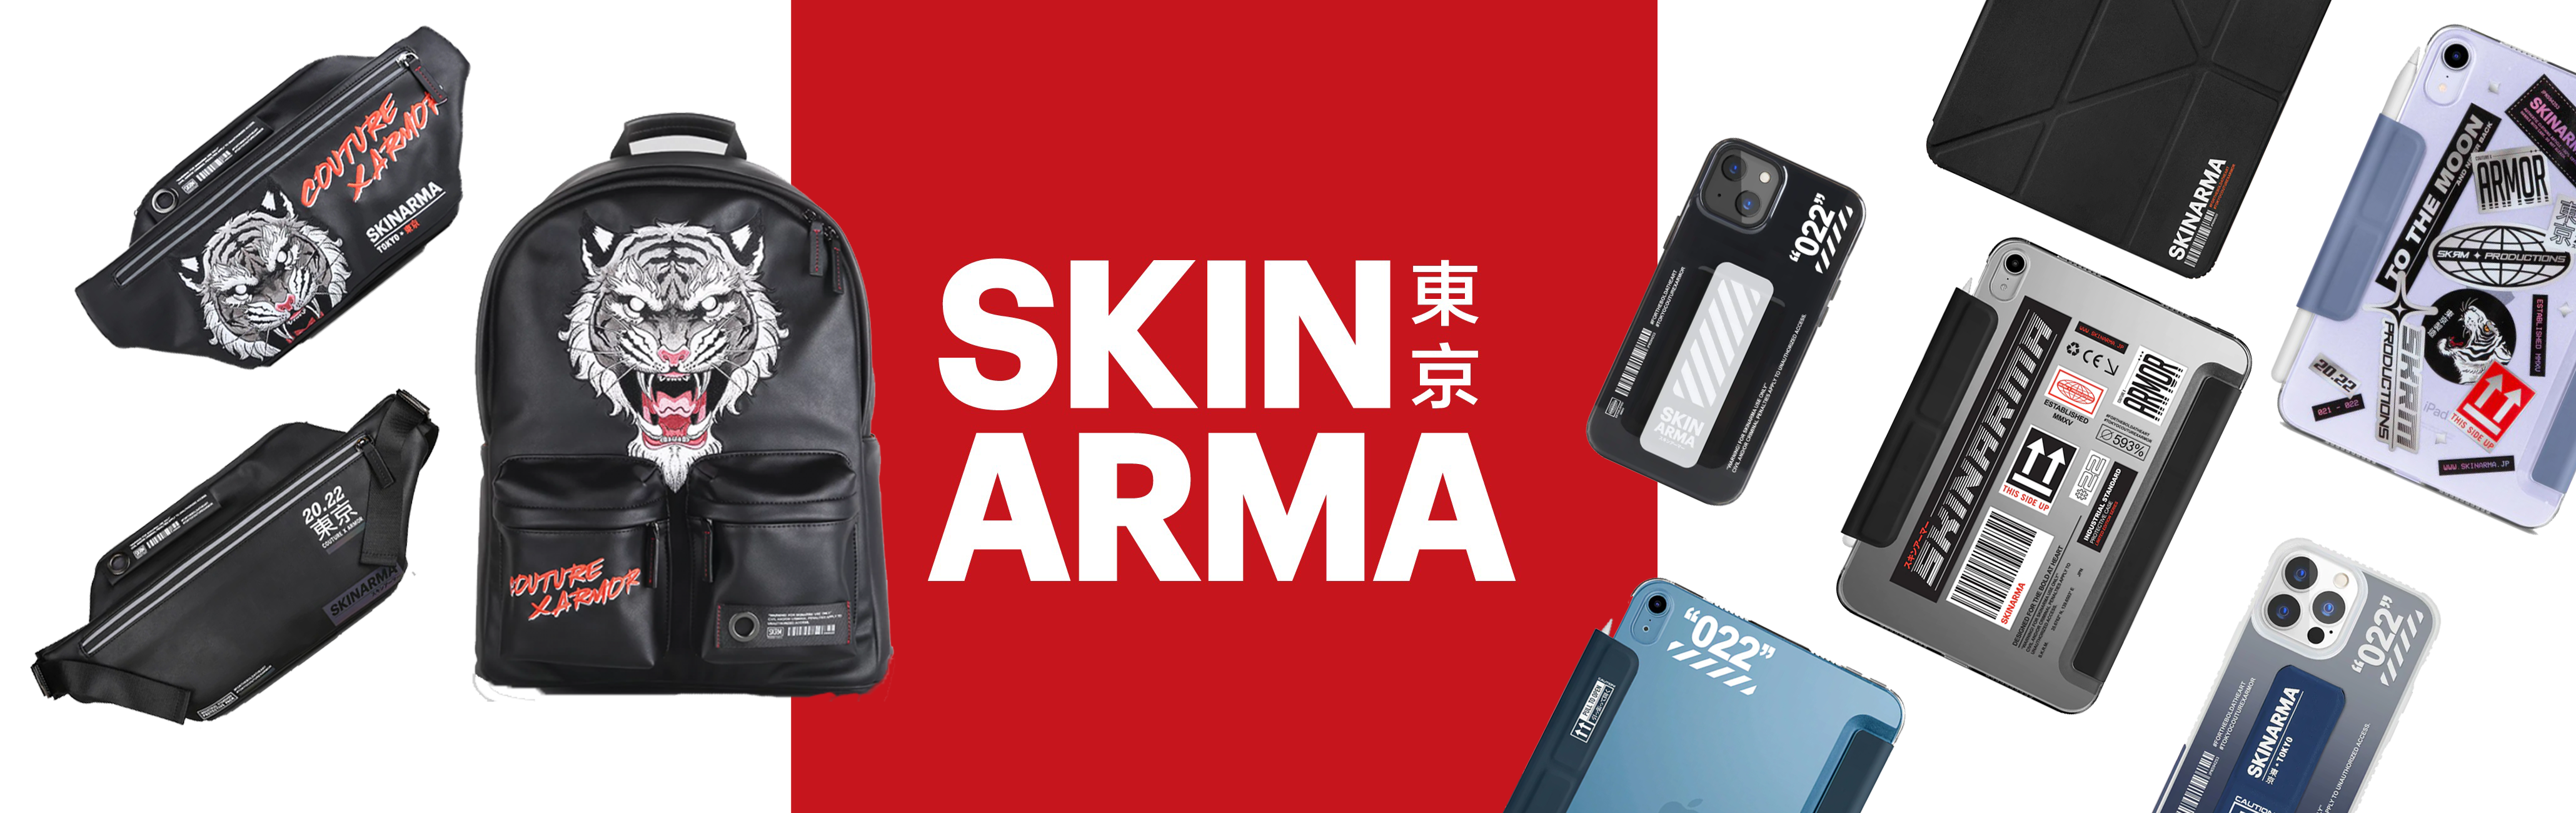 Banner SkinArma